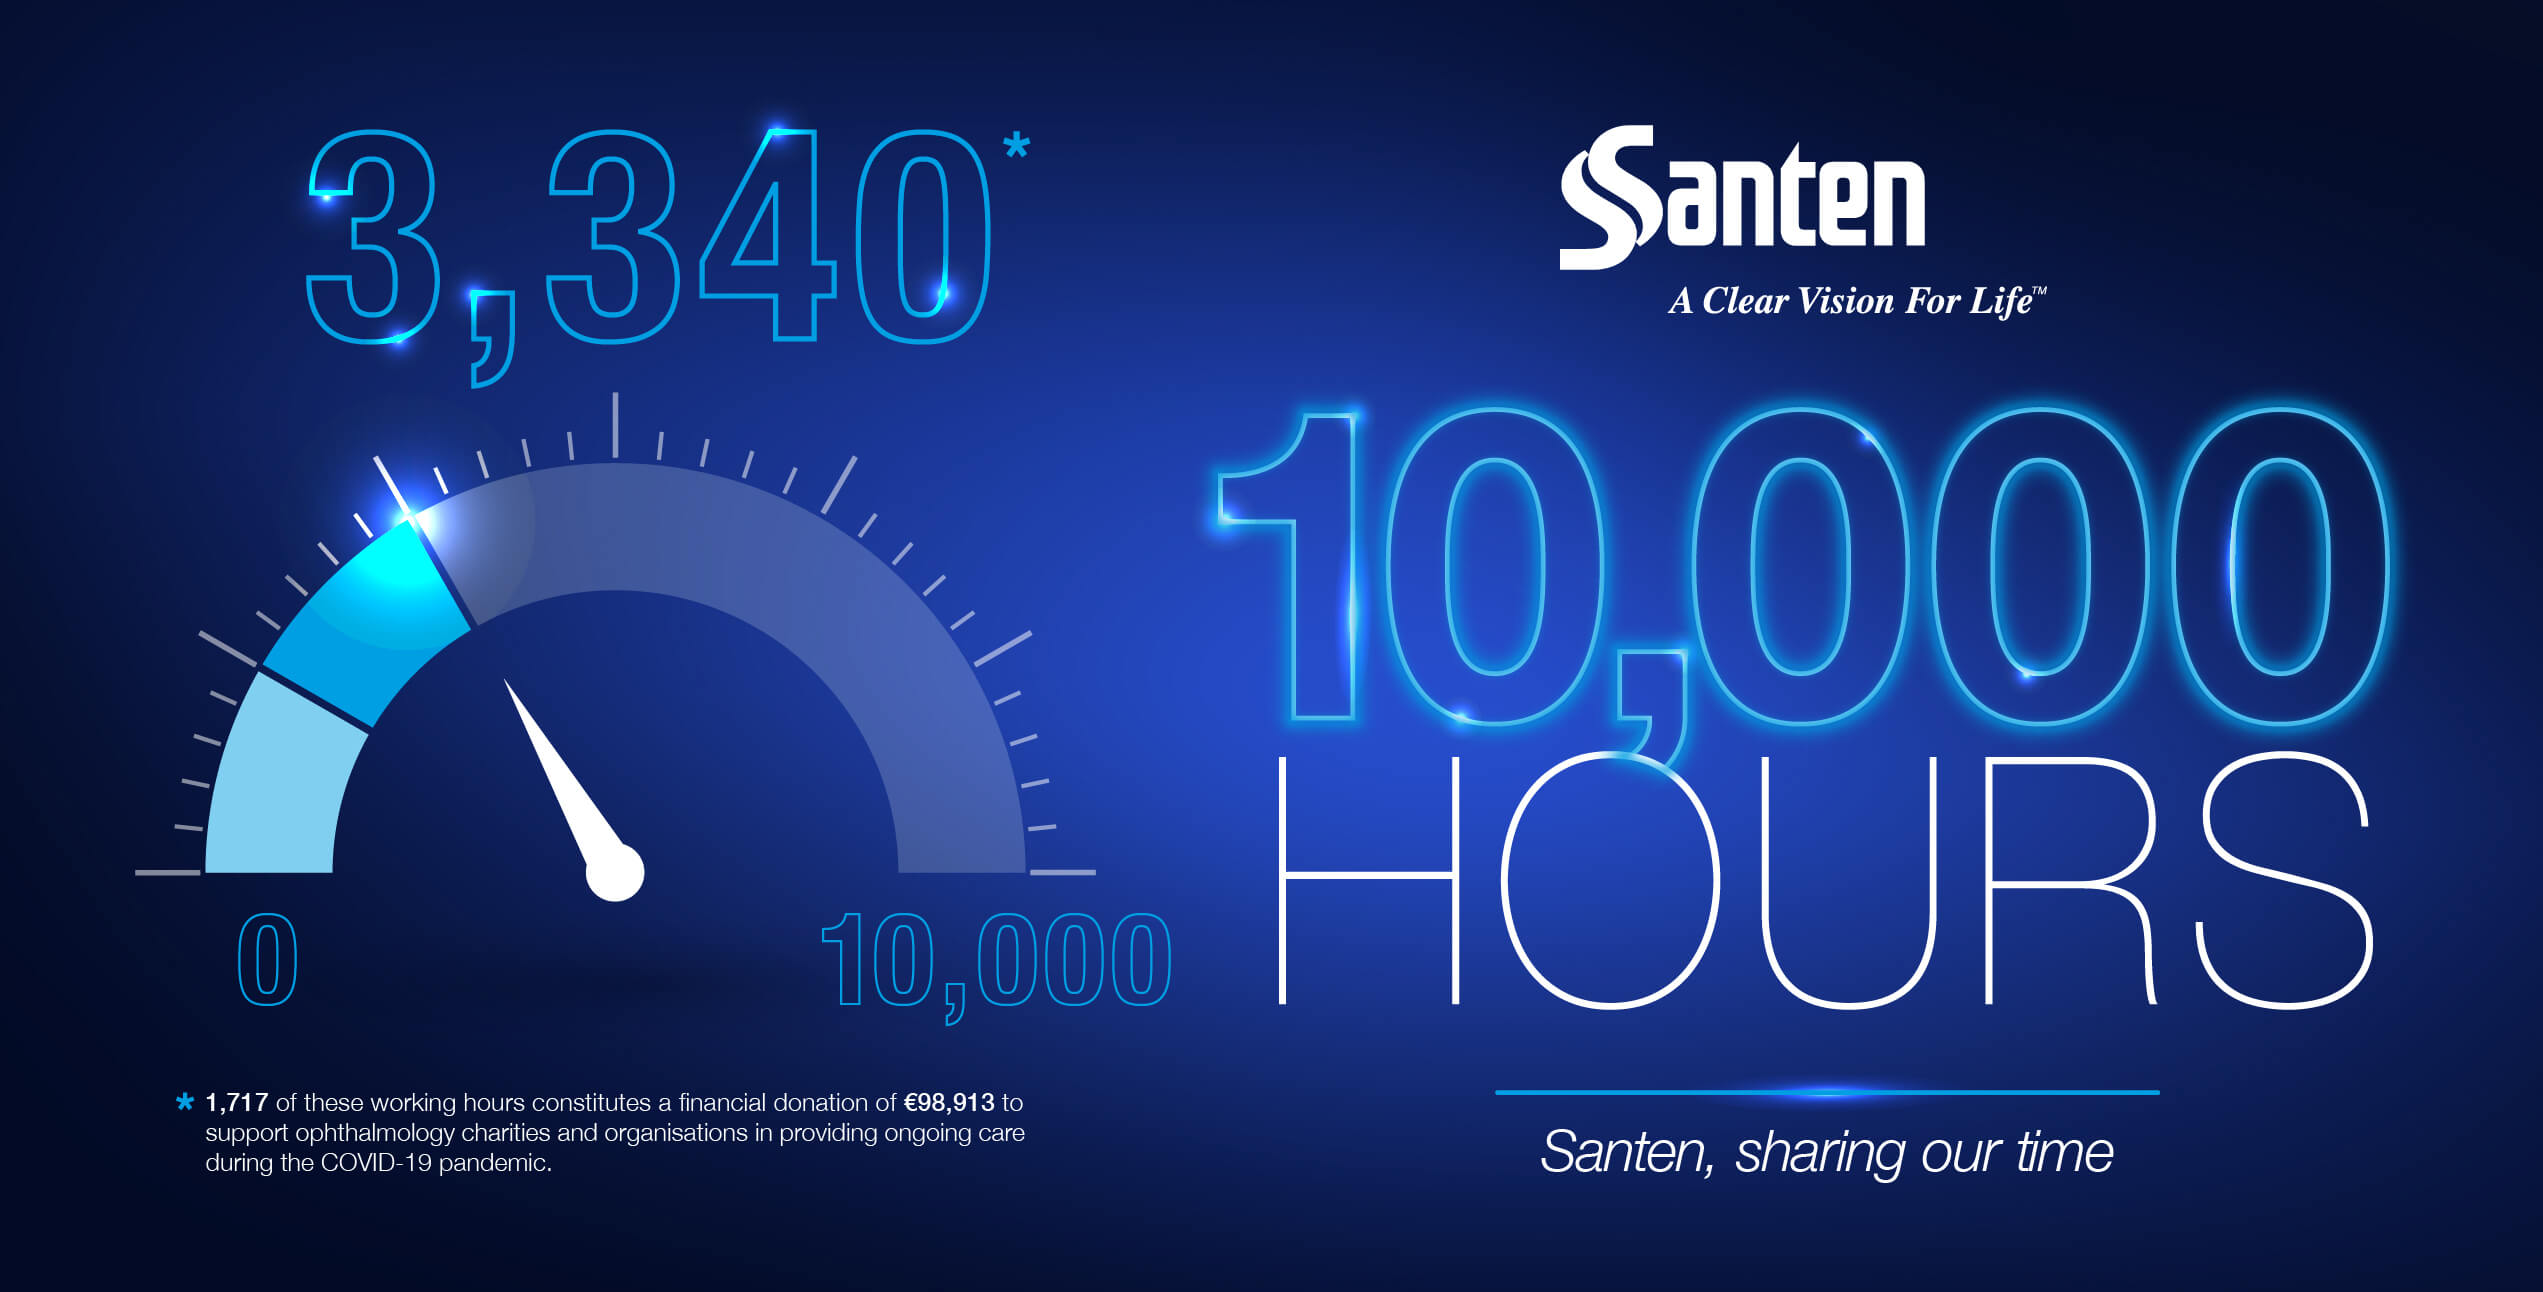 Santen EMEA has now donated 3,340 hours